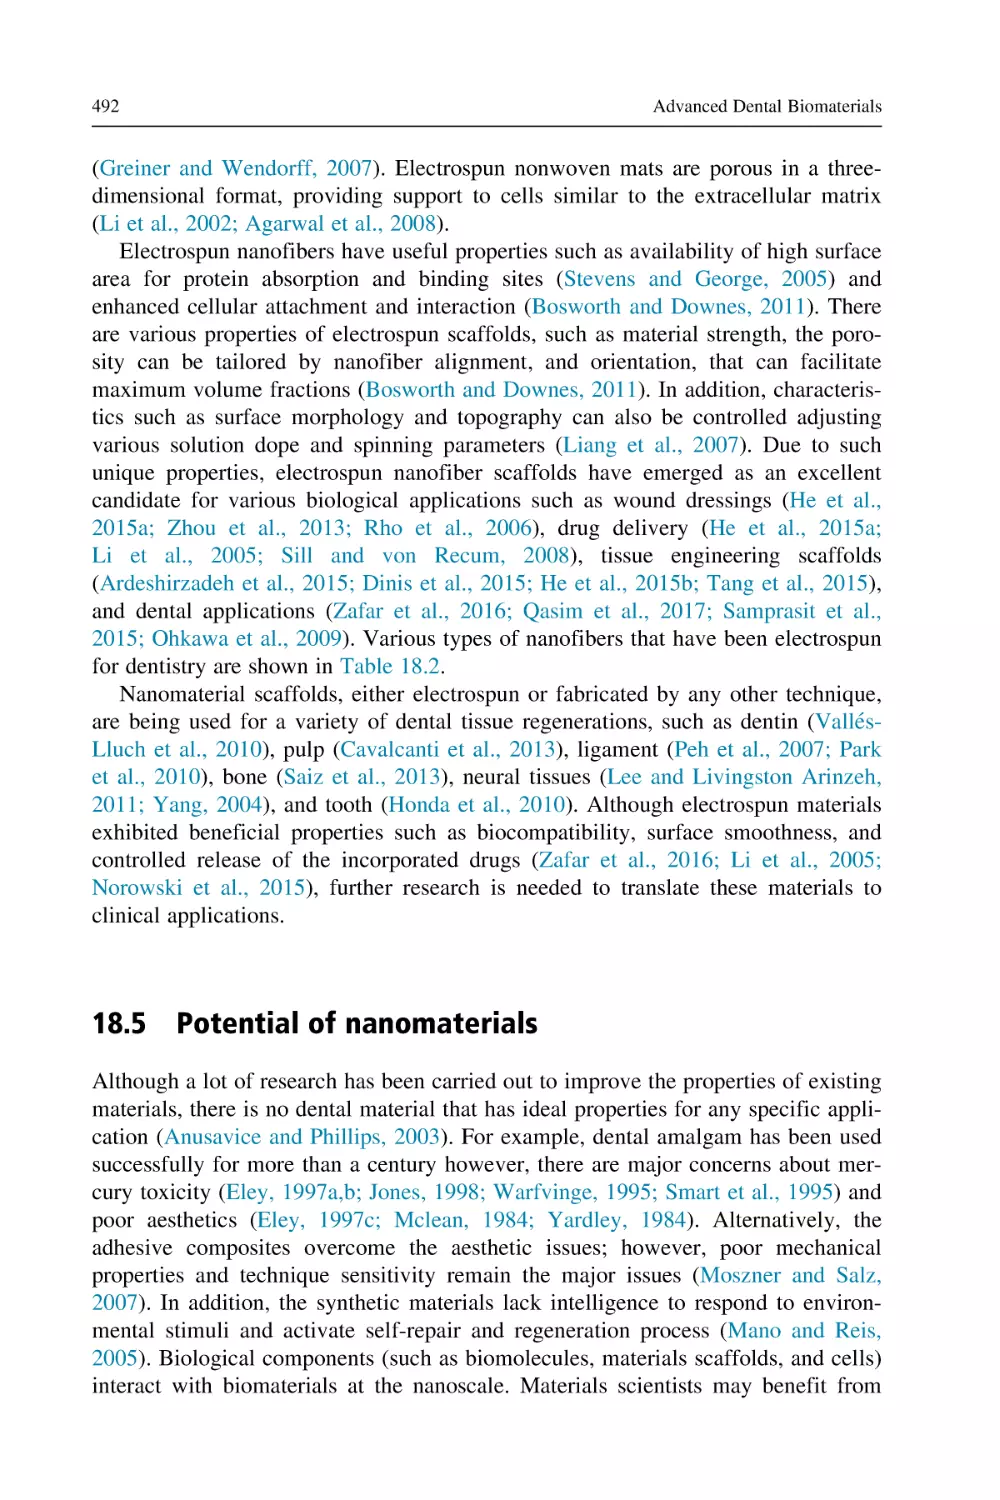 18.5 Potential of nanomaterials